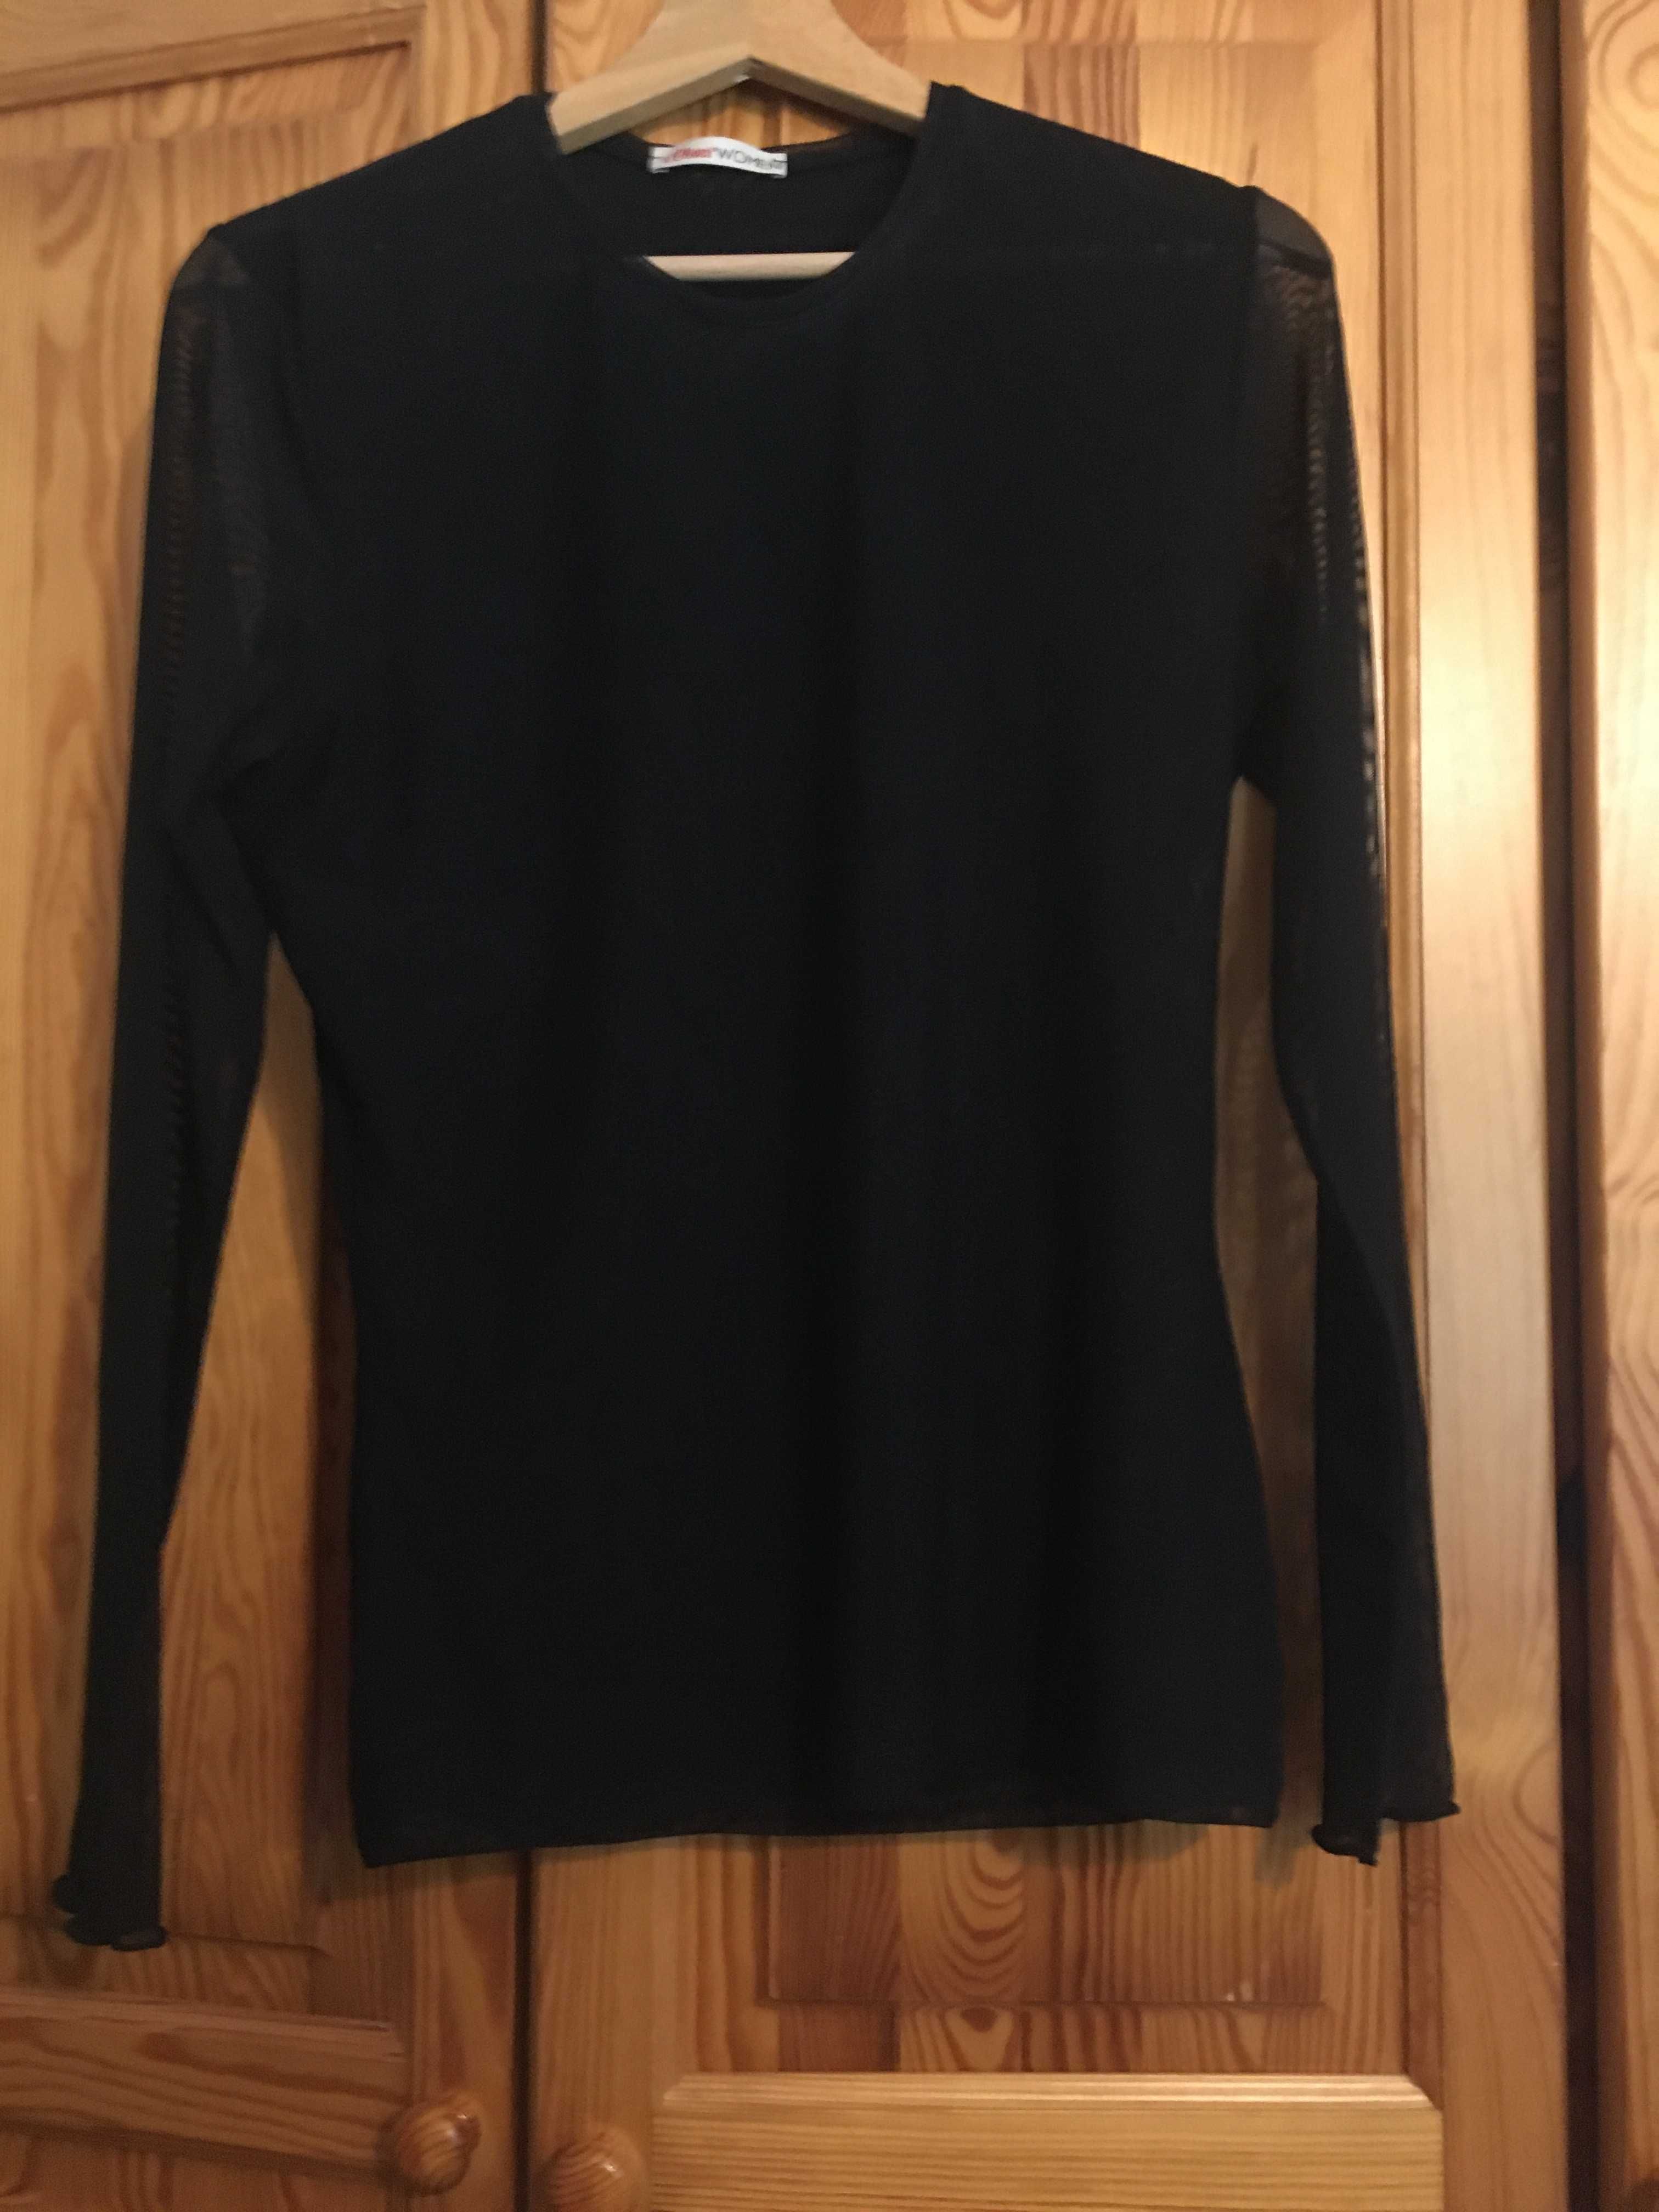 Czarna bluzka Oliver 36/38 r. S / M Czarna koszulka elegancka